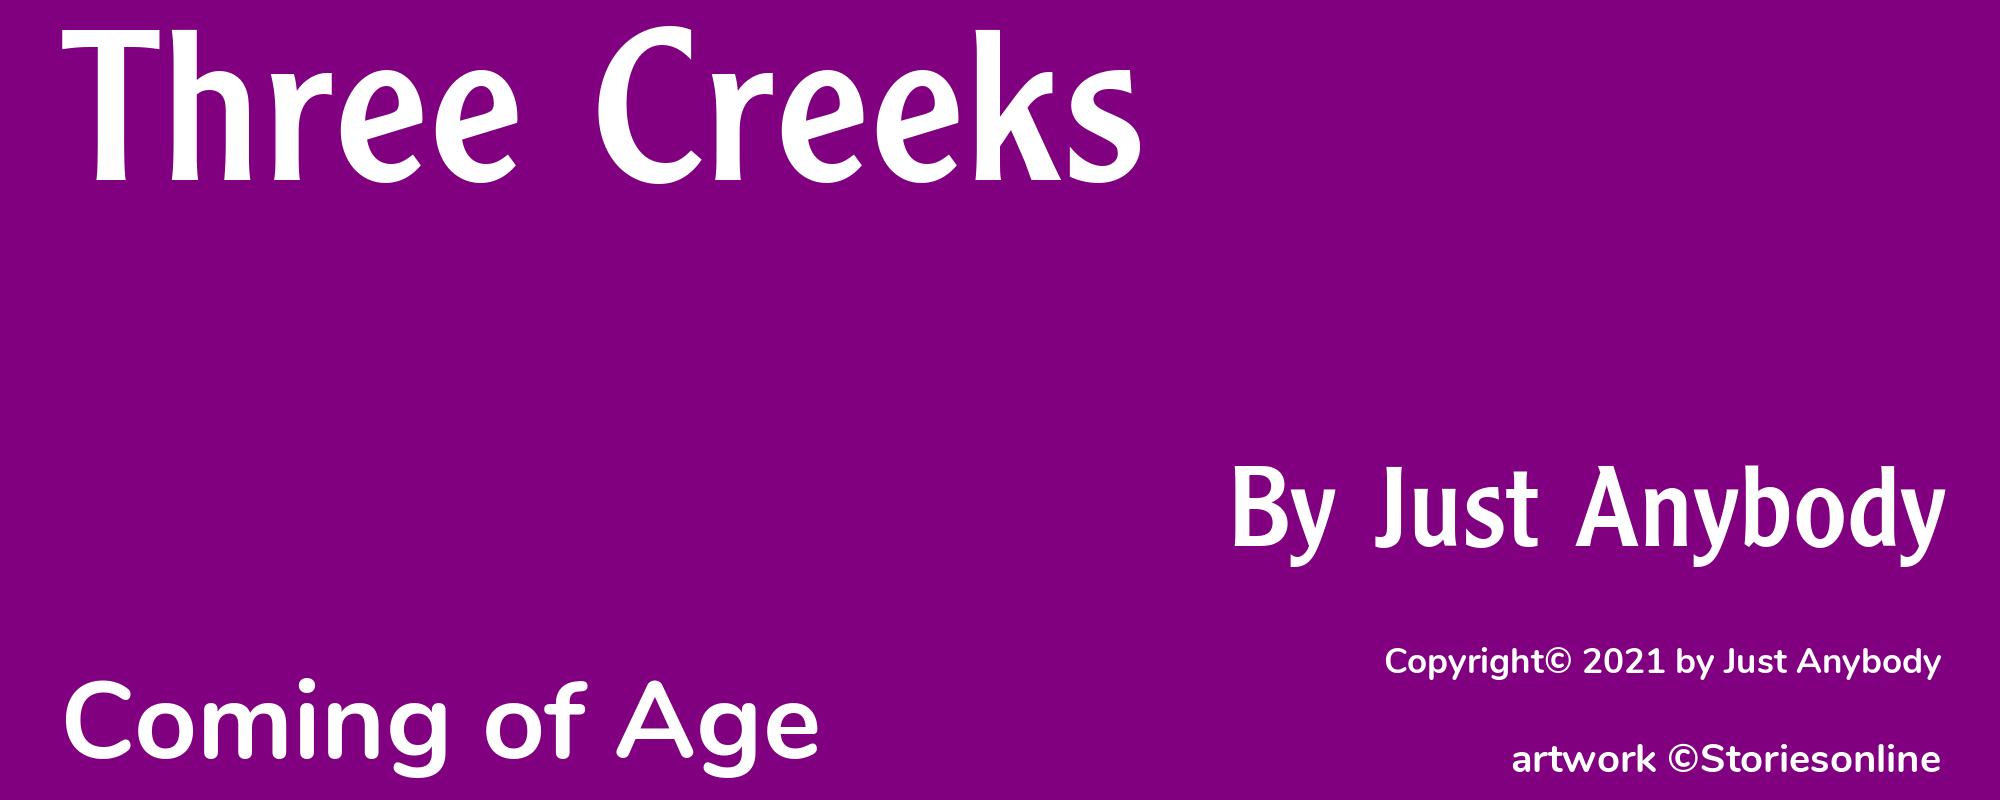 Three Creeks - Cover